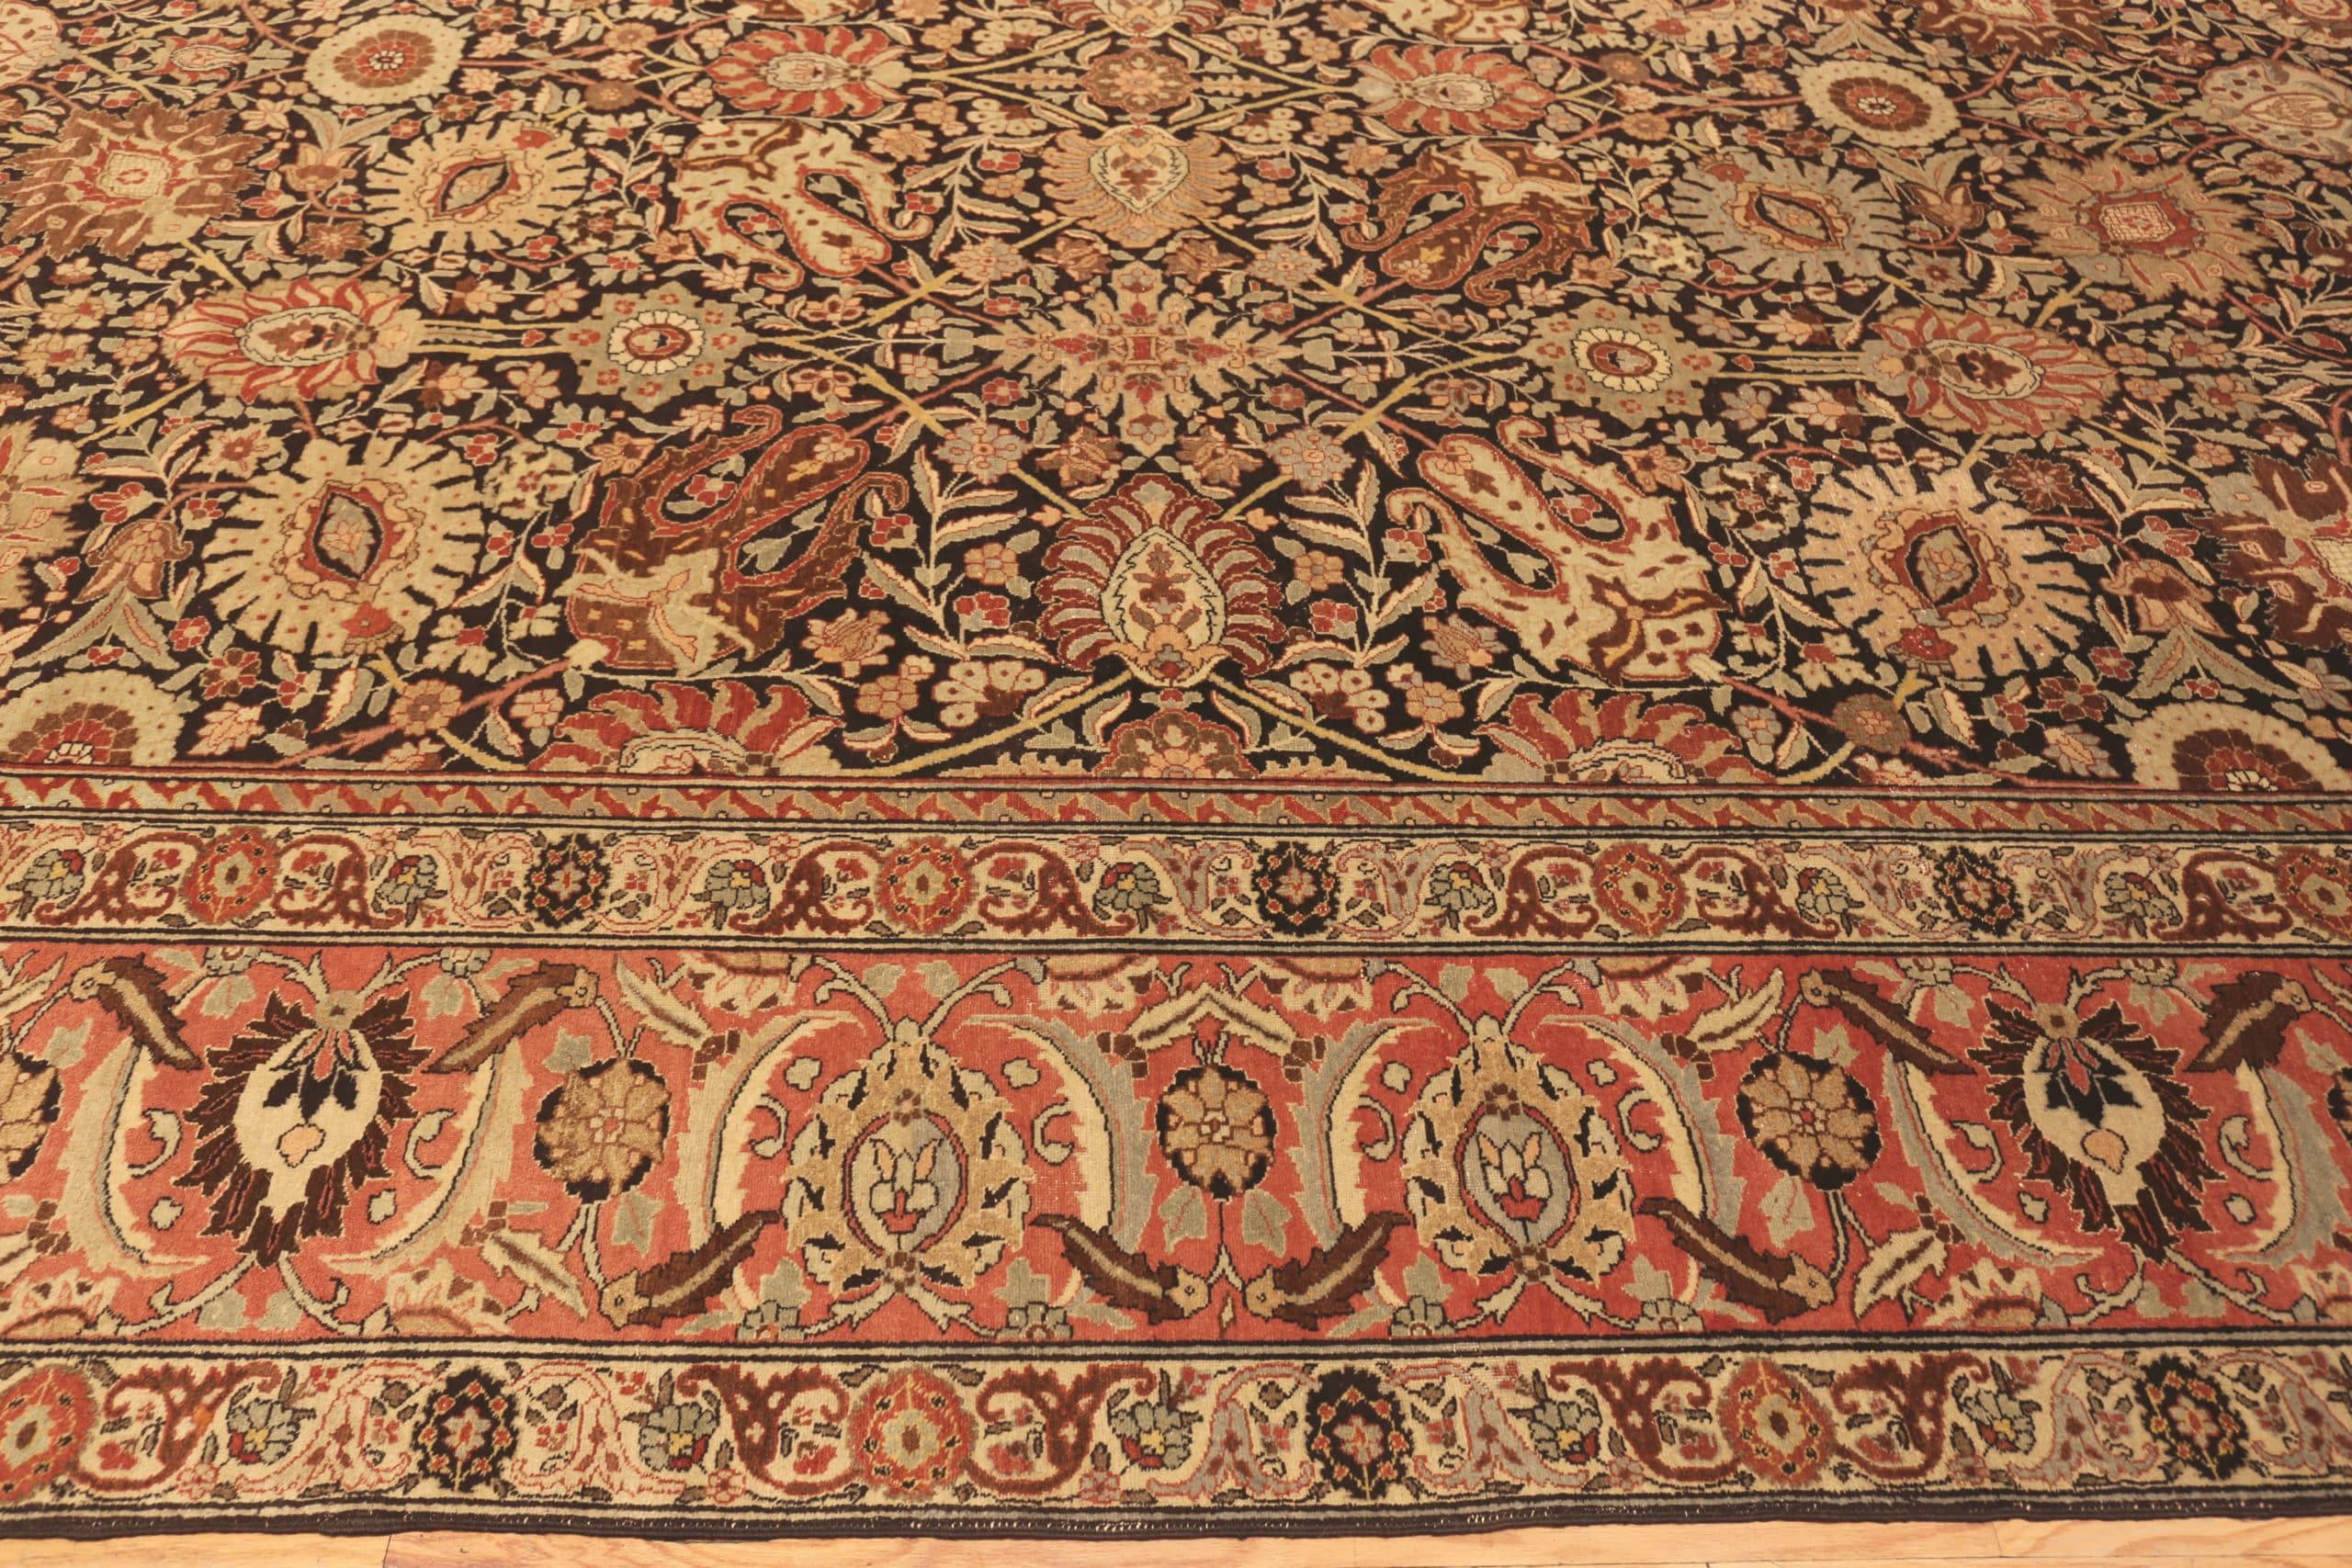 Oversized Antique Persian Tabriz Vase Design Carpet, Country of Origin: Persia, Circa date: 1900. Size: 12 ft 9 in x 20 ft 3 in (3.89 m x 6.17 m)

